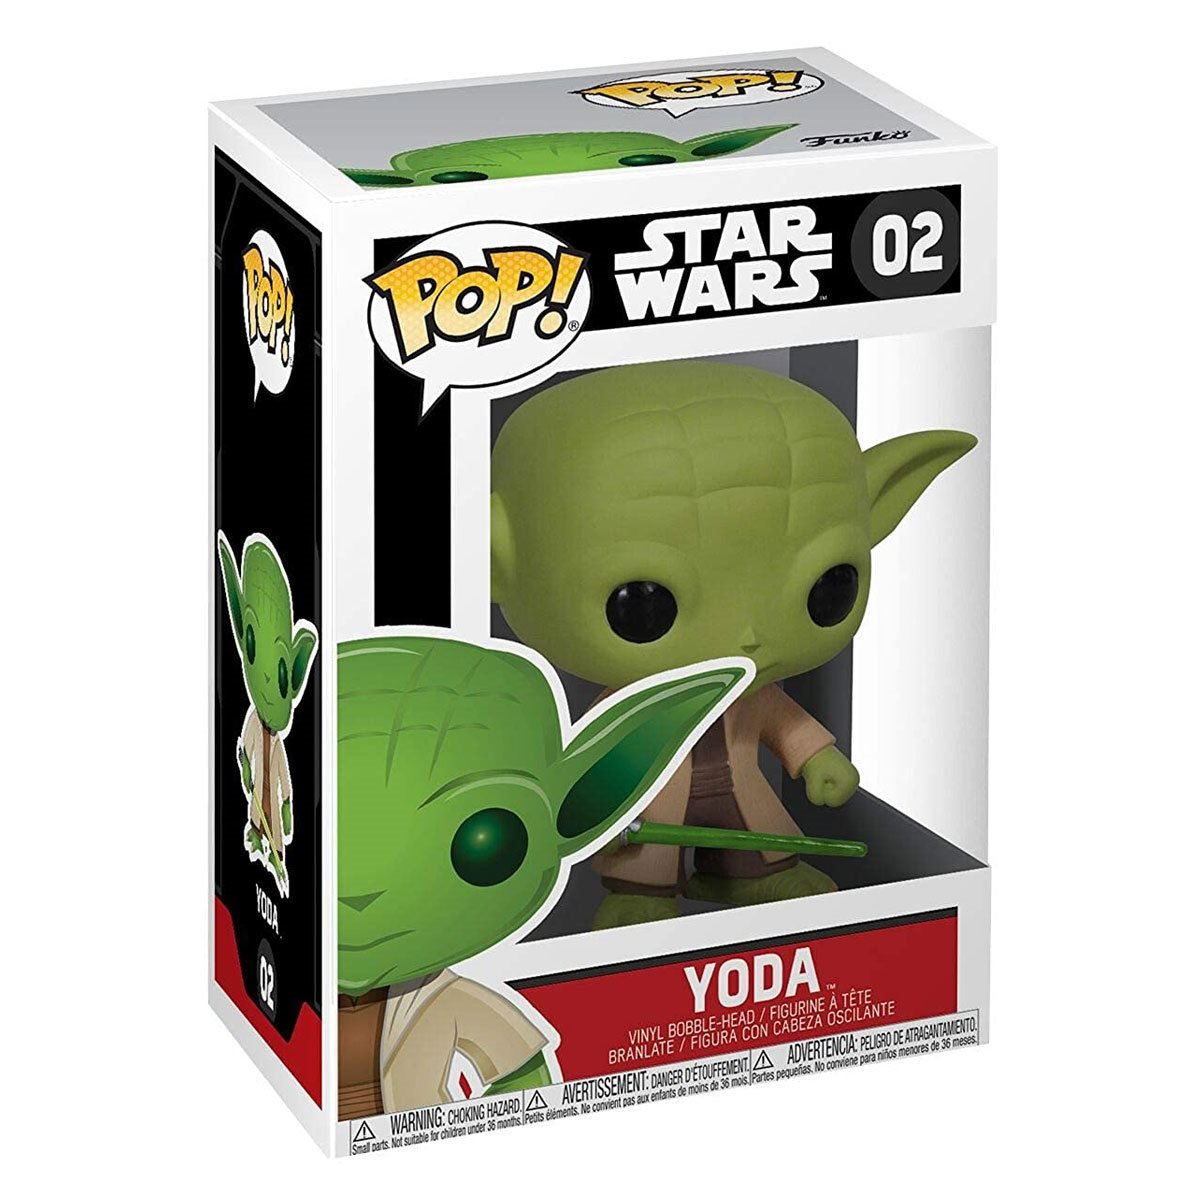 Yoda n°02 black packaging Pop! - Funko Star Wars 